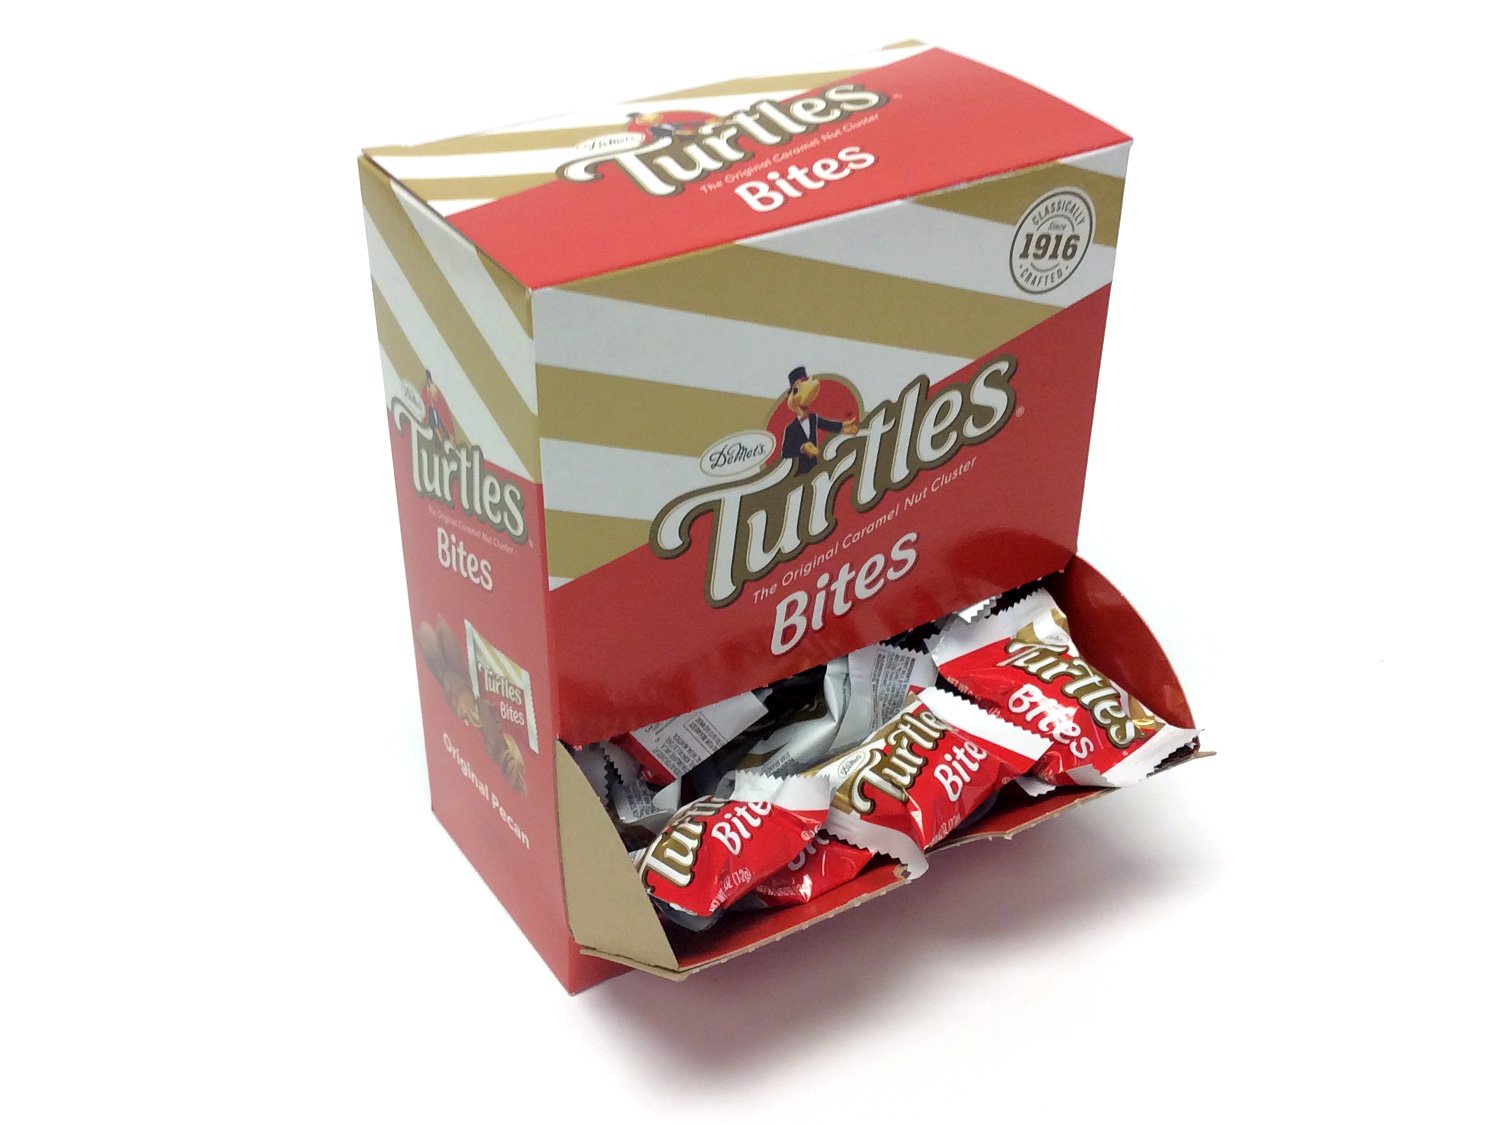 Turtles Original by DeMet's - 0.42 oz Bite-Size - box of 60 open